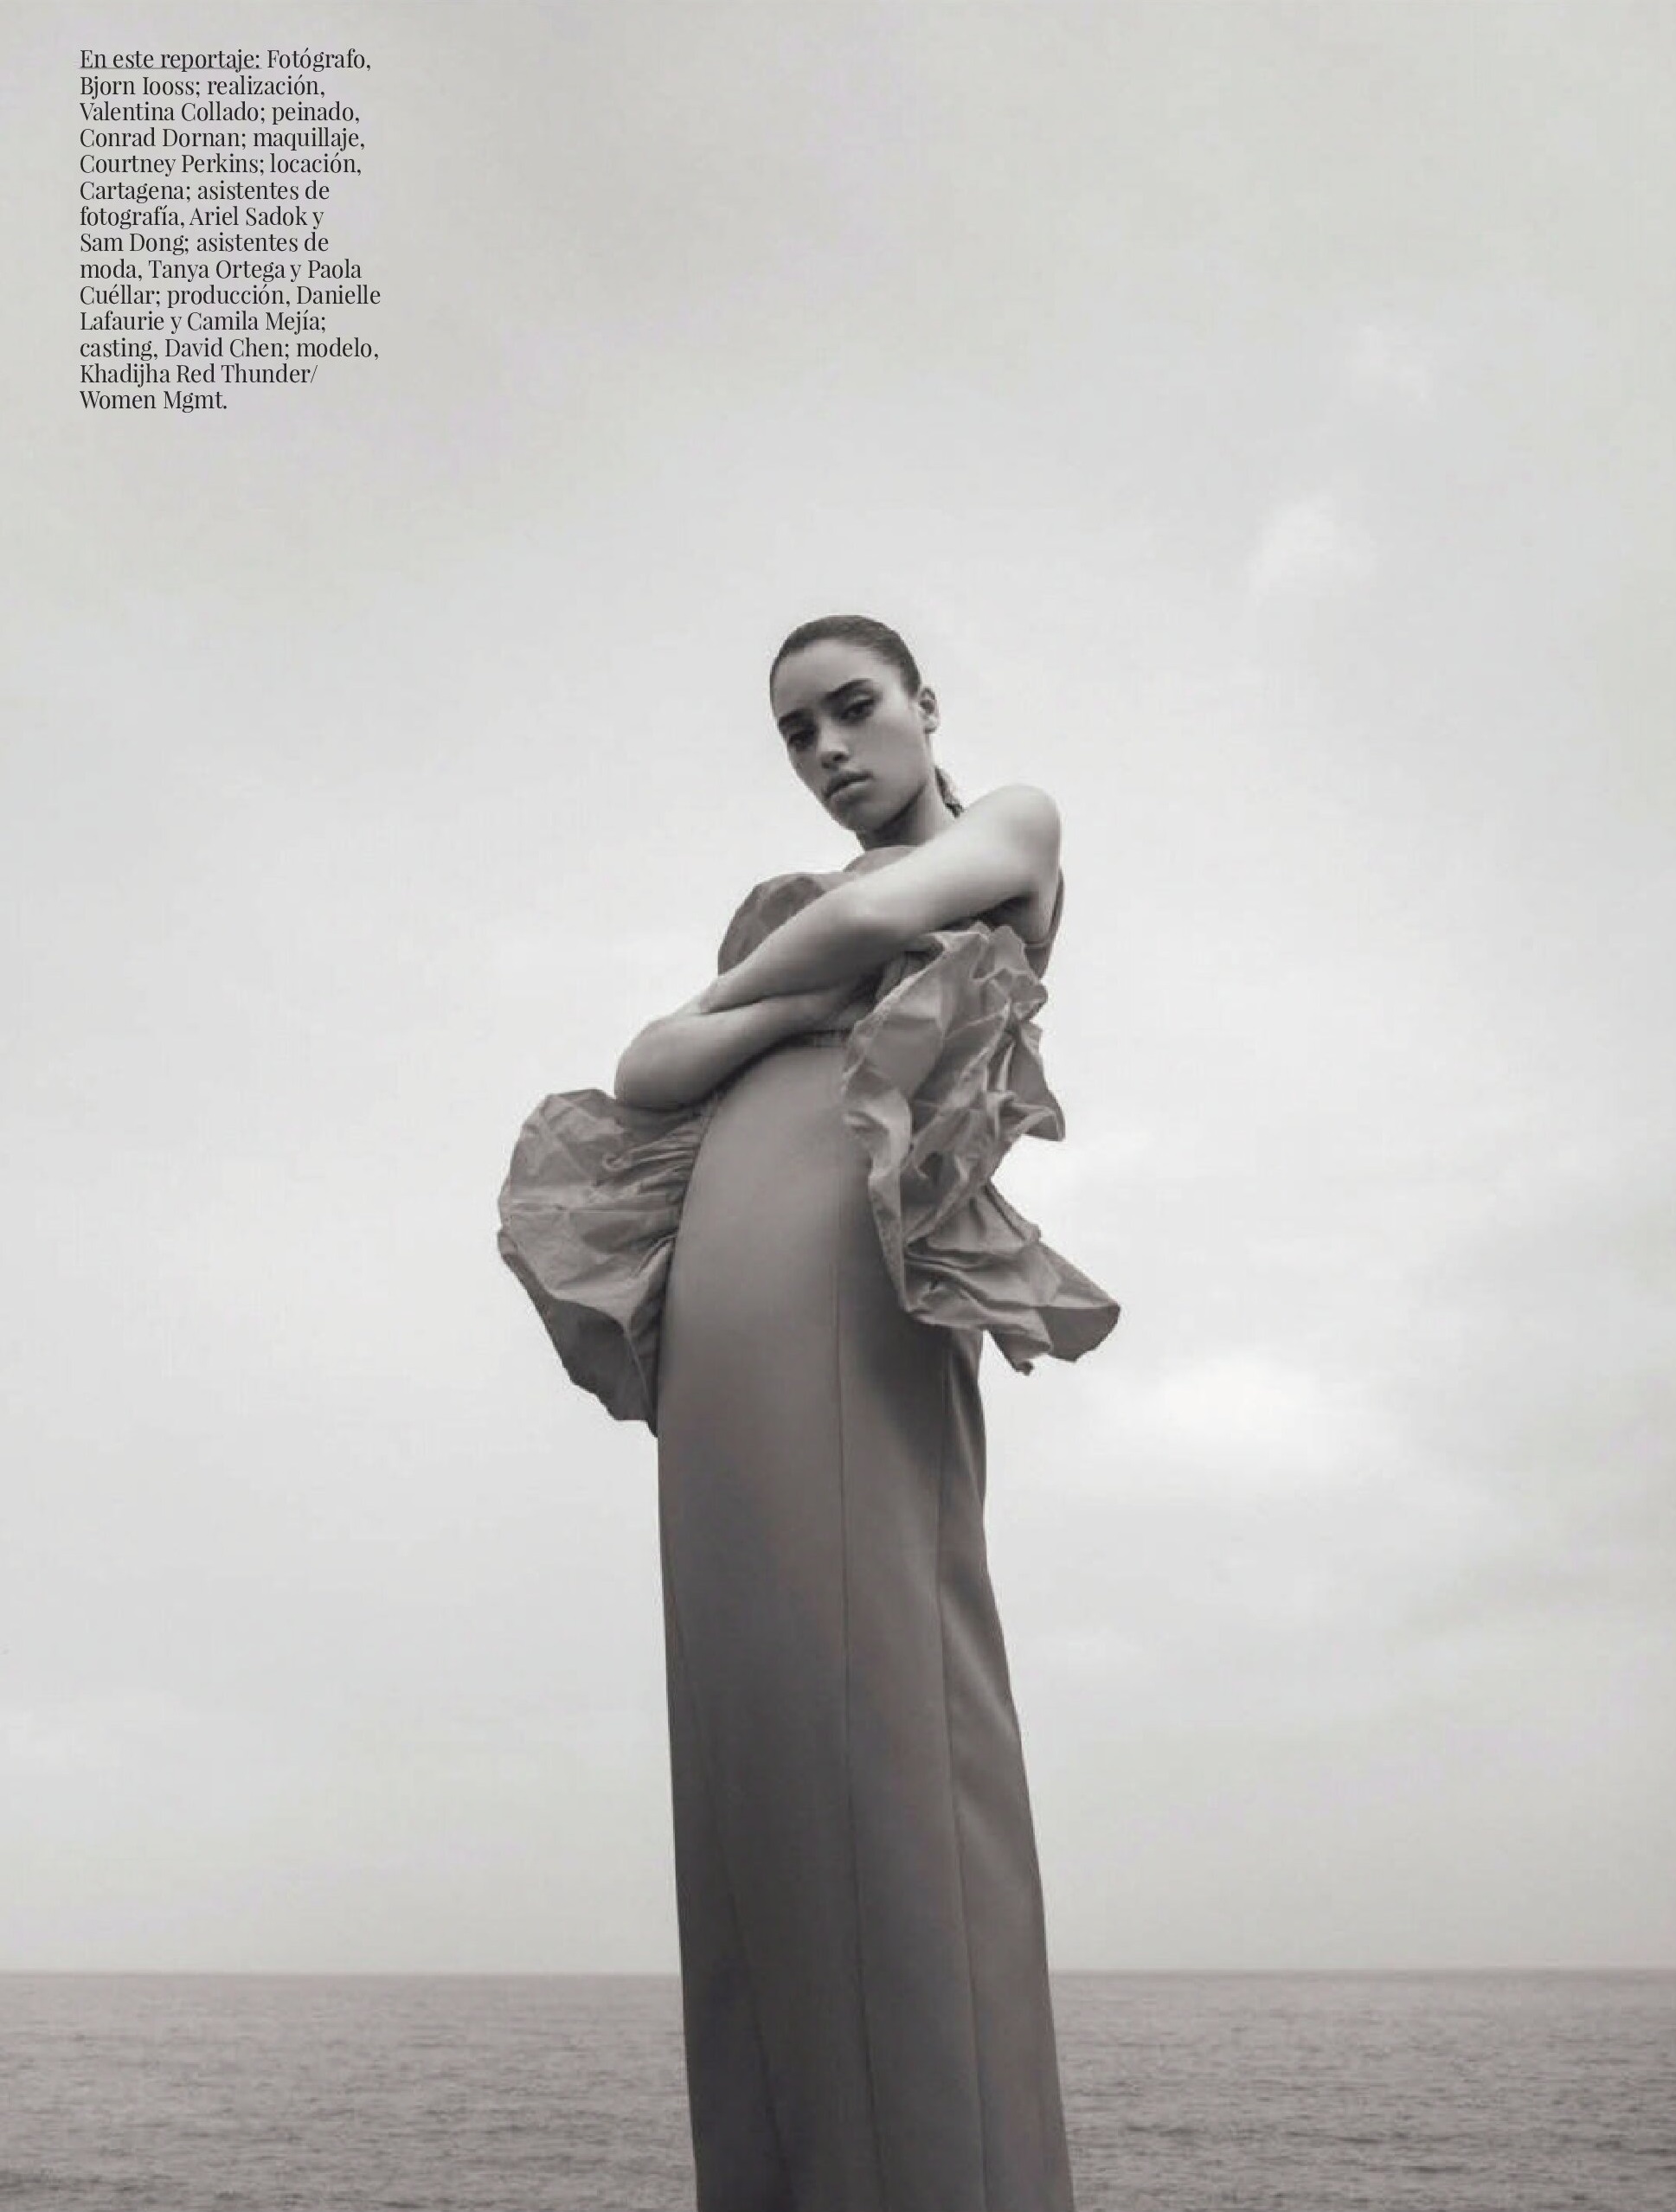 Khadija-Red-Thunder-Bjorn-Iooss-Vogue-Latin-America-May-2019- (5).jpg